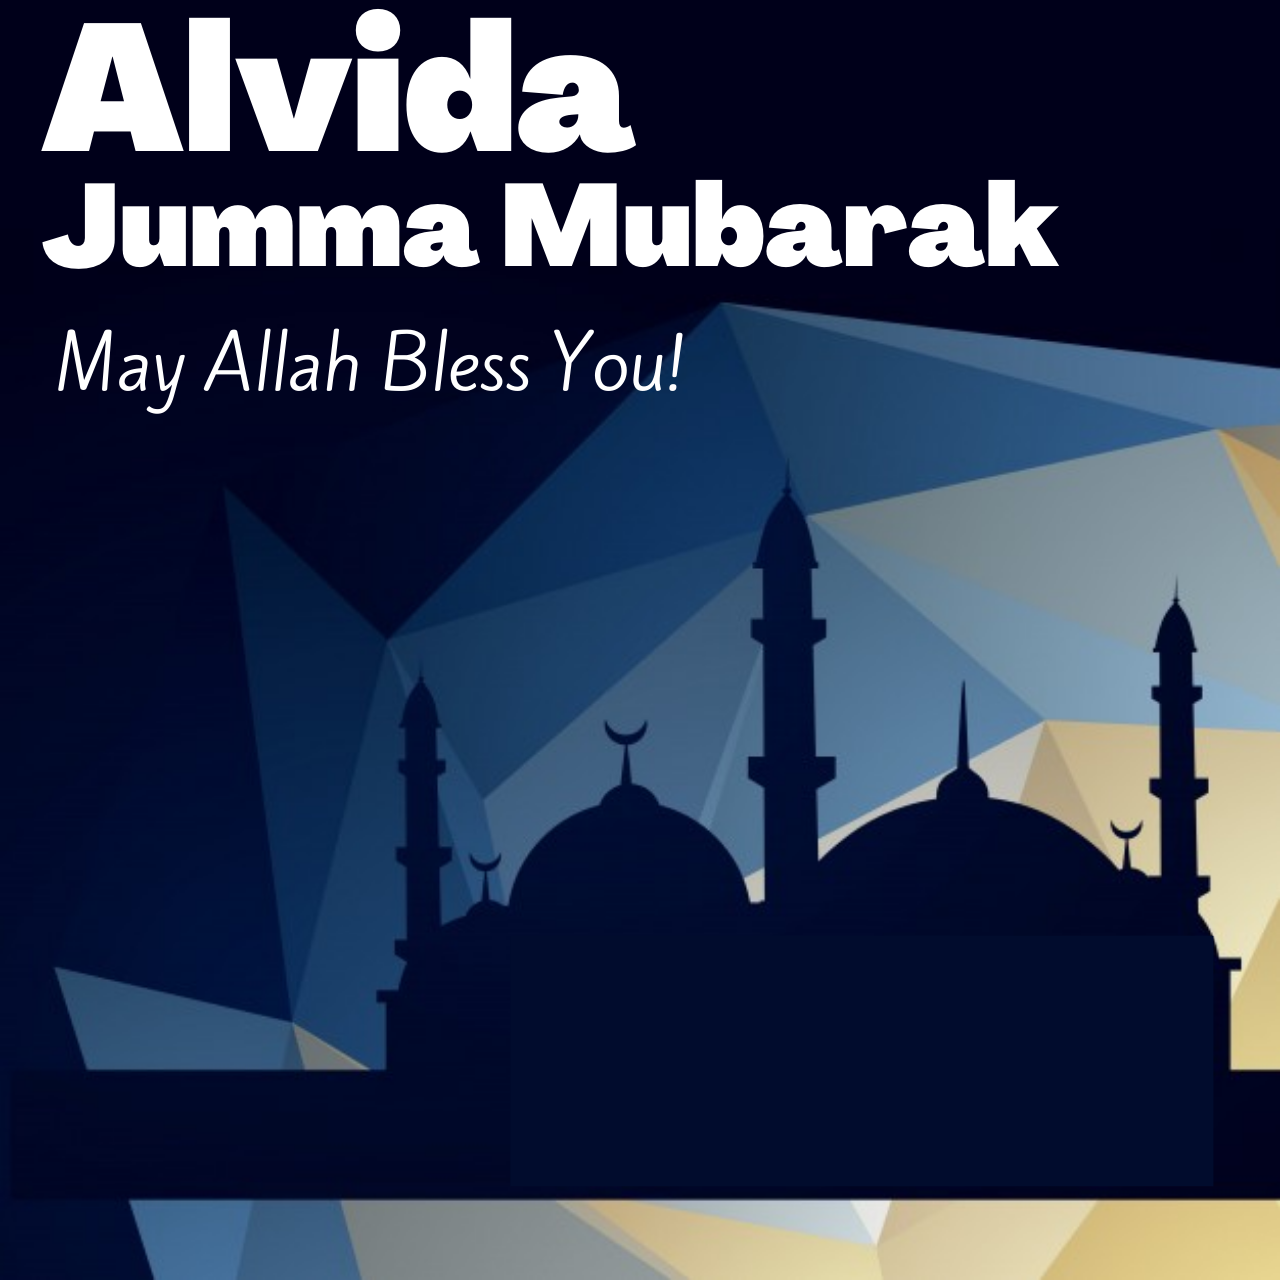 Alvida Jumma Mubarak 2021 WhatsApp Status Video Download to share on Jumma tul Wida